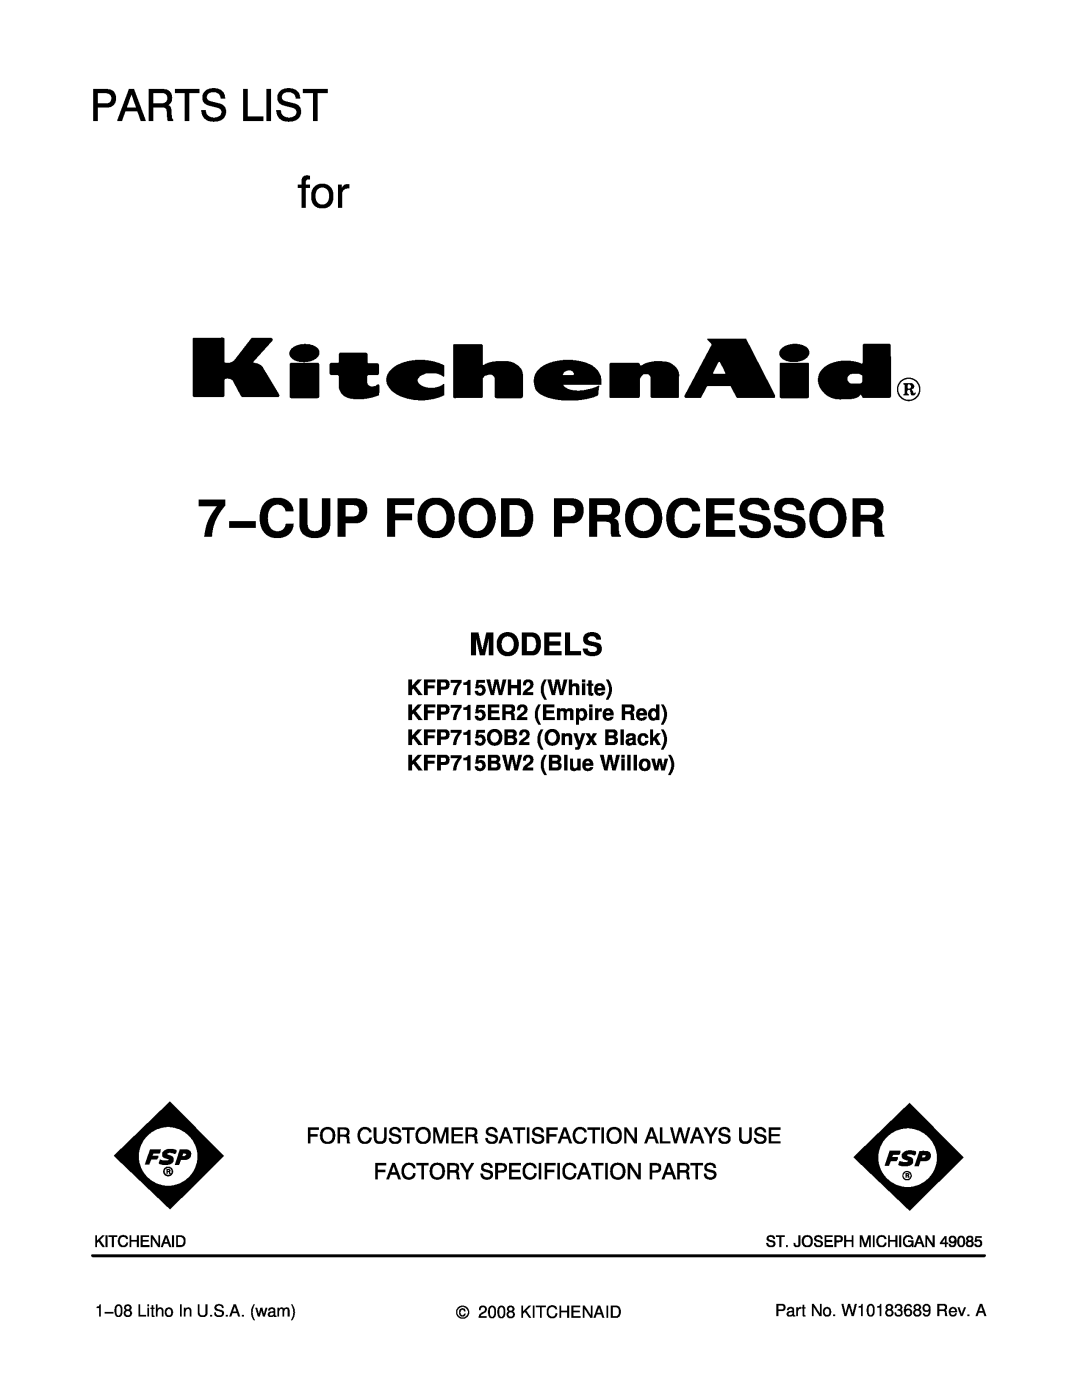 KitchenAid manual Models, KFP715WH2 White KFP715ER2 Empire Red KFP715OB2 Onyx Black, KFP715BW2 Blue Willow 